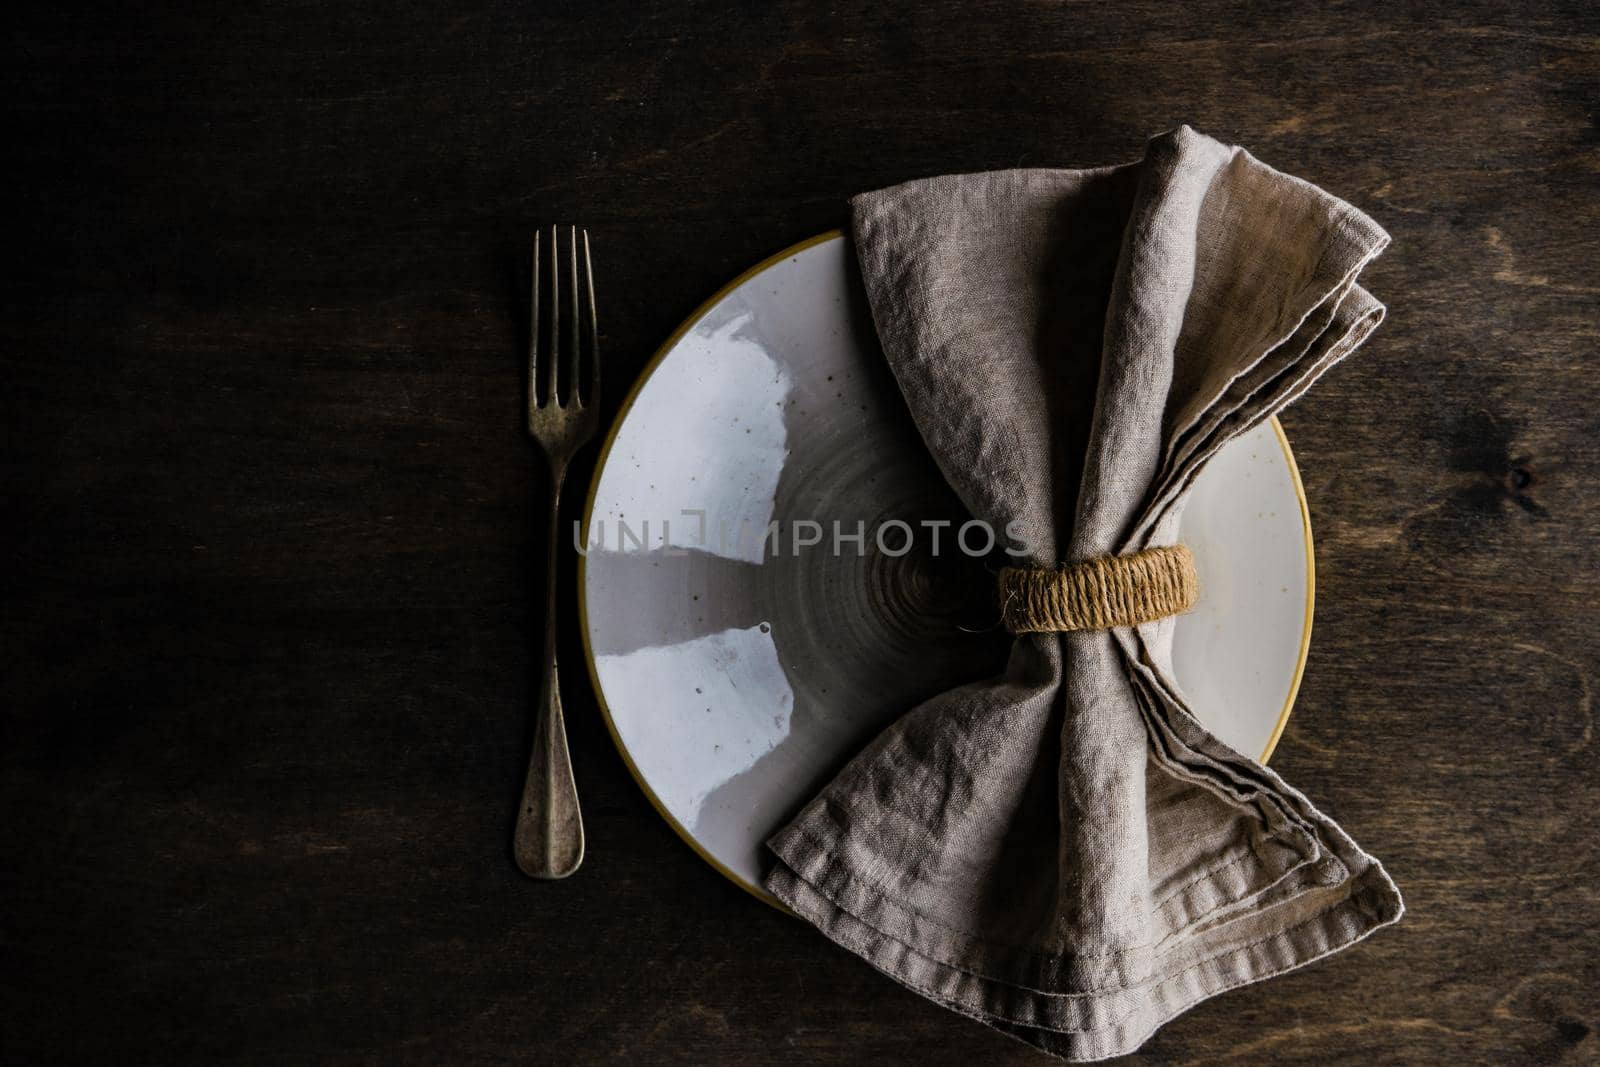 Vintage dinnerware served on wooden table